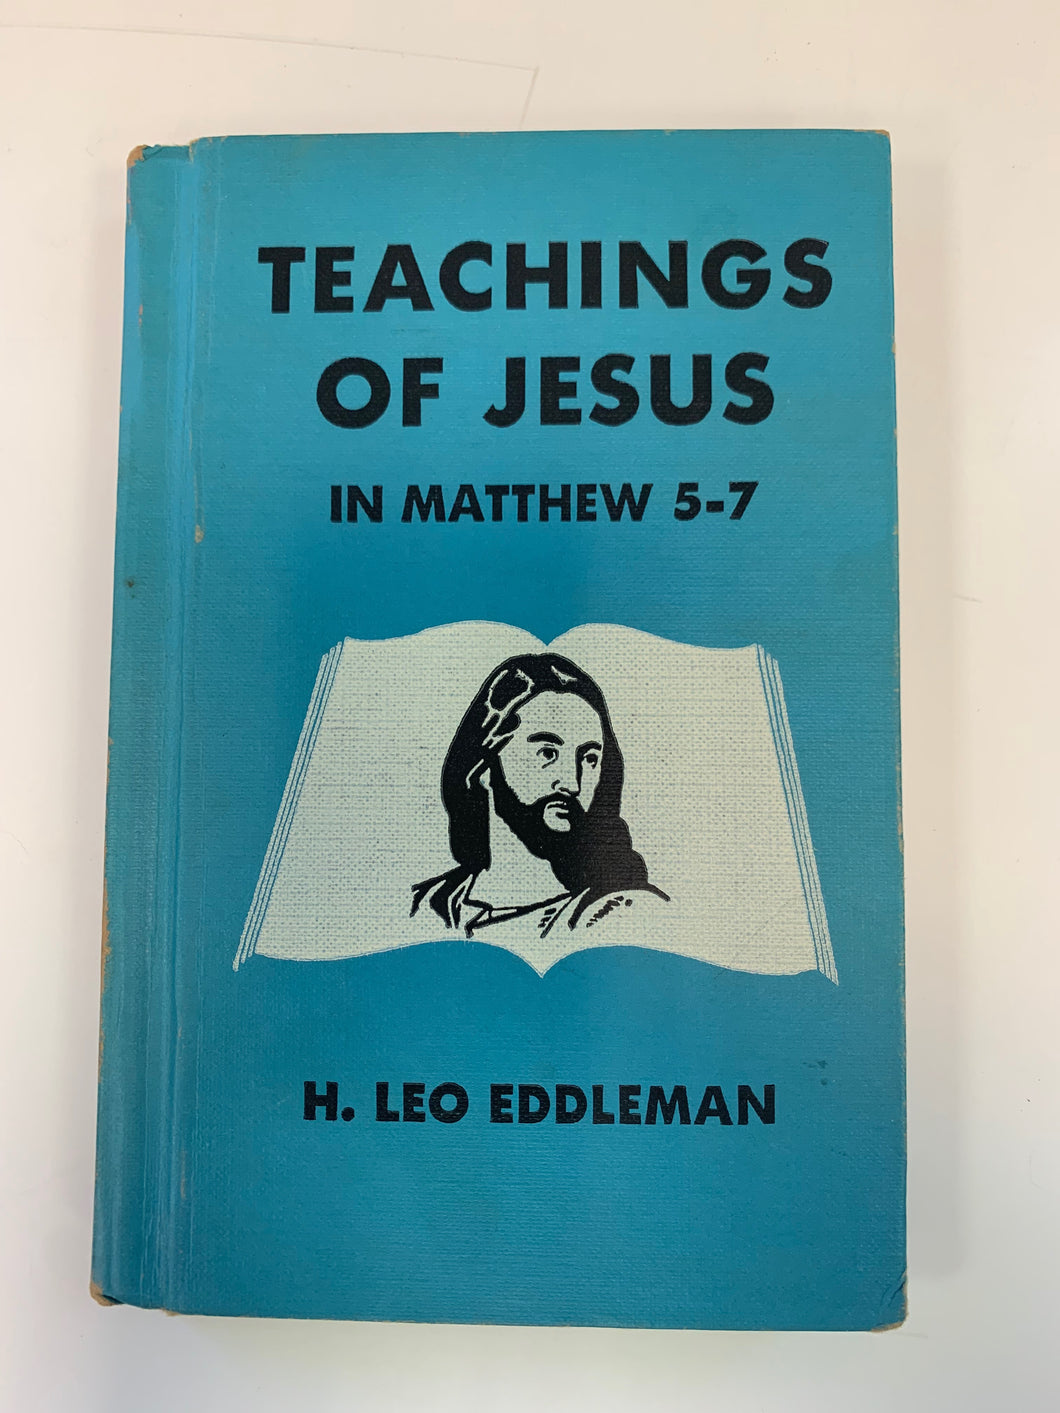 Teachings of Jesus: In Matthew 5-7 by H. Leo Eddleman